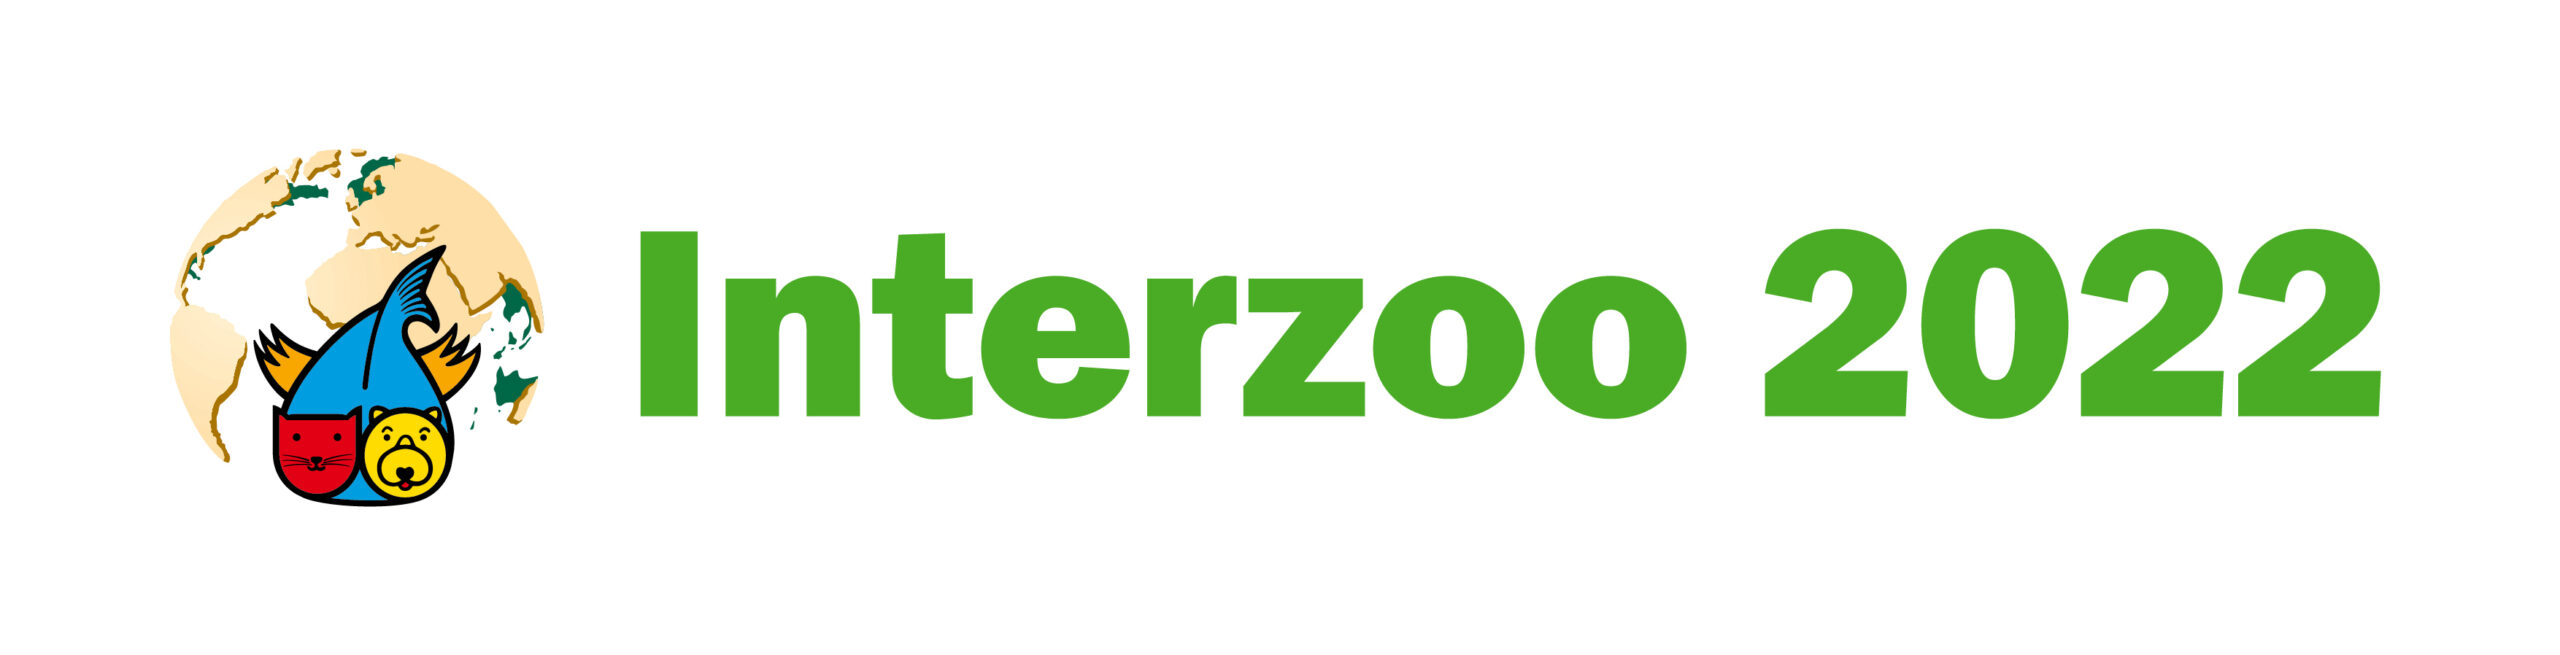 Interzoo 2022 logo